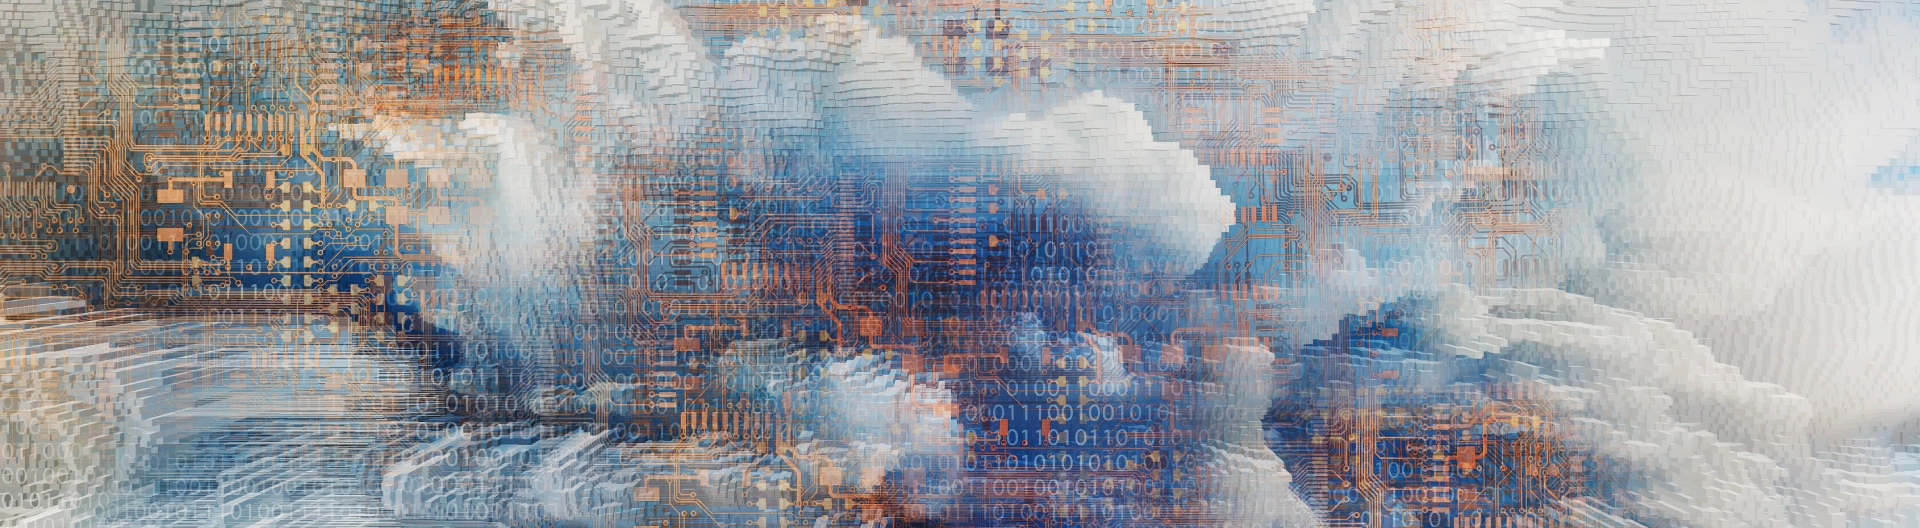 AWS Hybrid Cloud Solutions [banner]